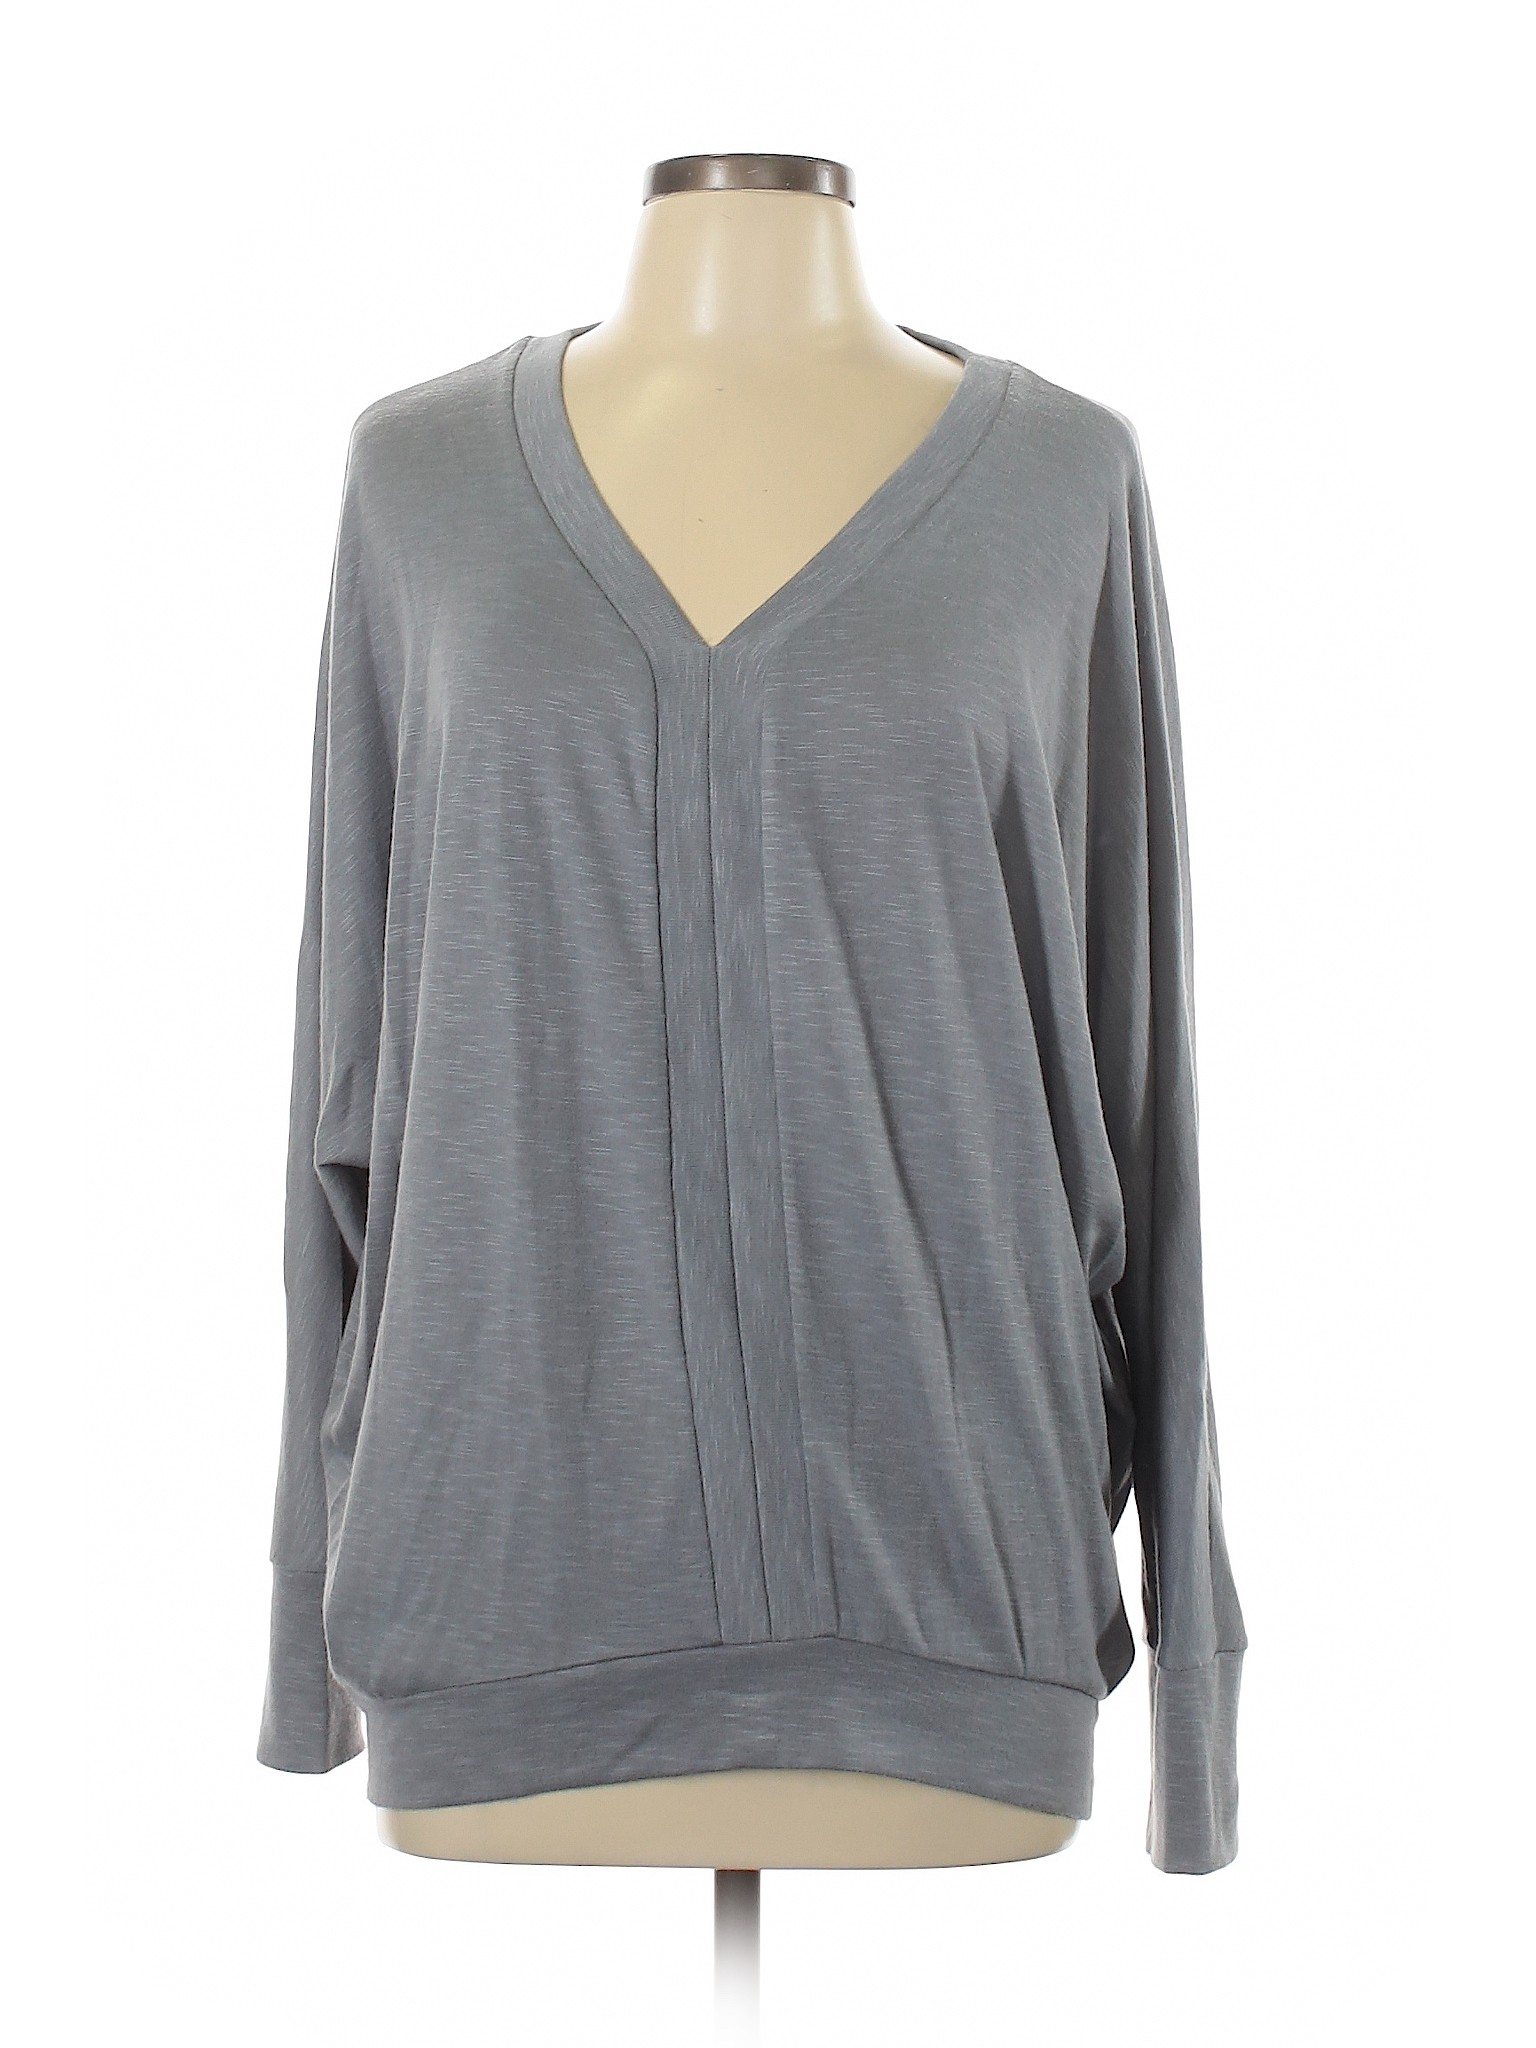 Jane and Delancey Women Gray Pullover Sweater M | eBay